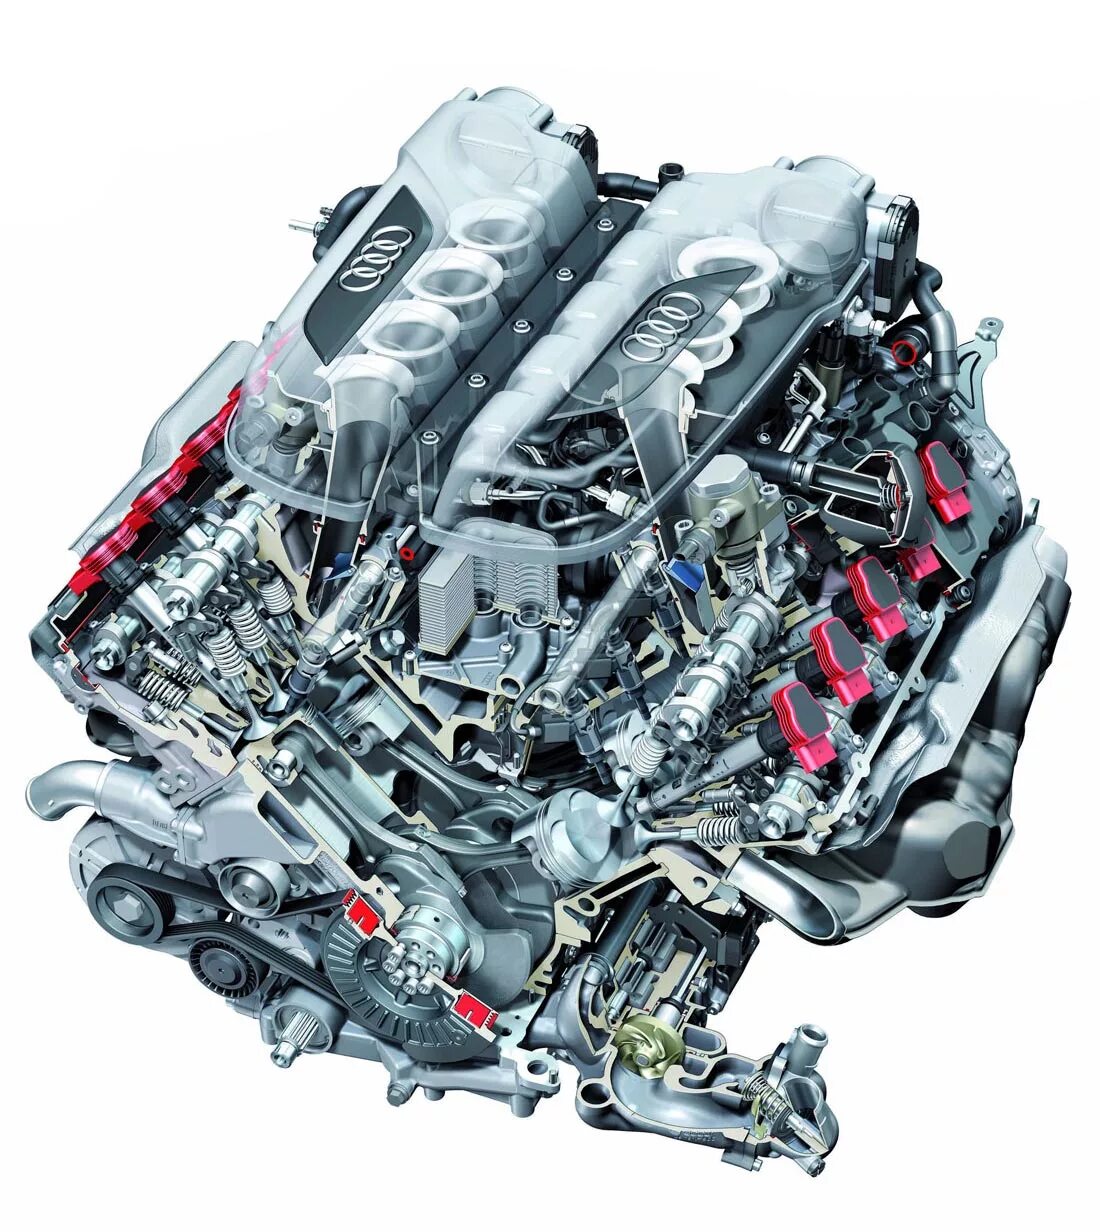 G v 10. Ауди р8 двигатель. Мотор Ауди 5.2 v10. Audi r8 v10 мотор. Audi r8 v8 двигатель.